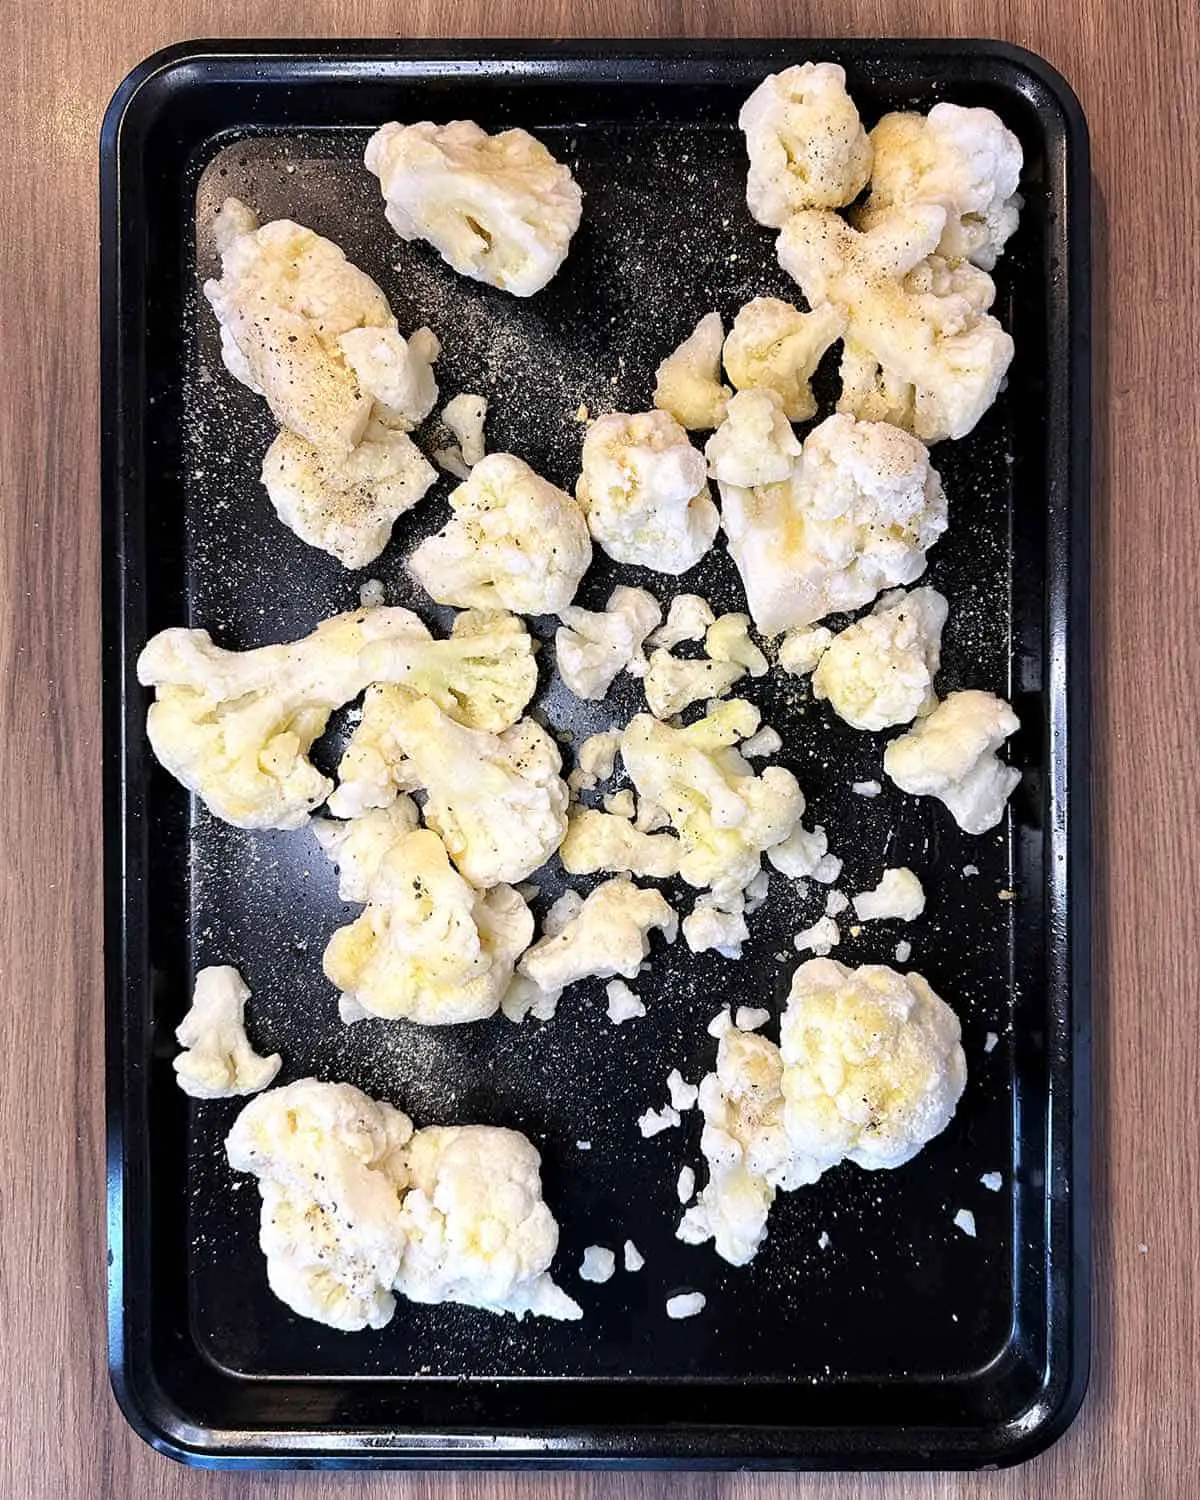 Frozen cauliflower florets on a large black baking tray.